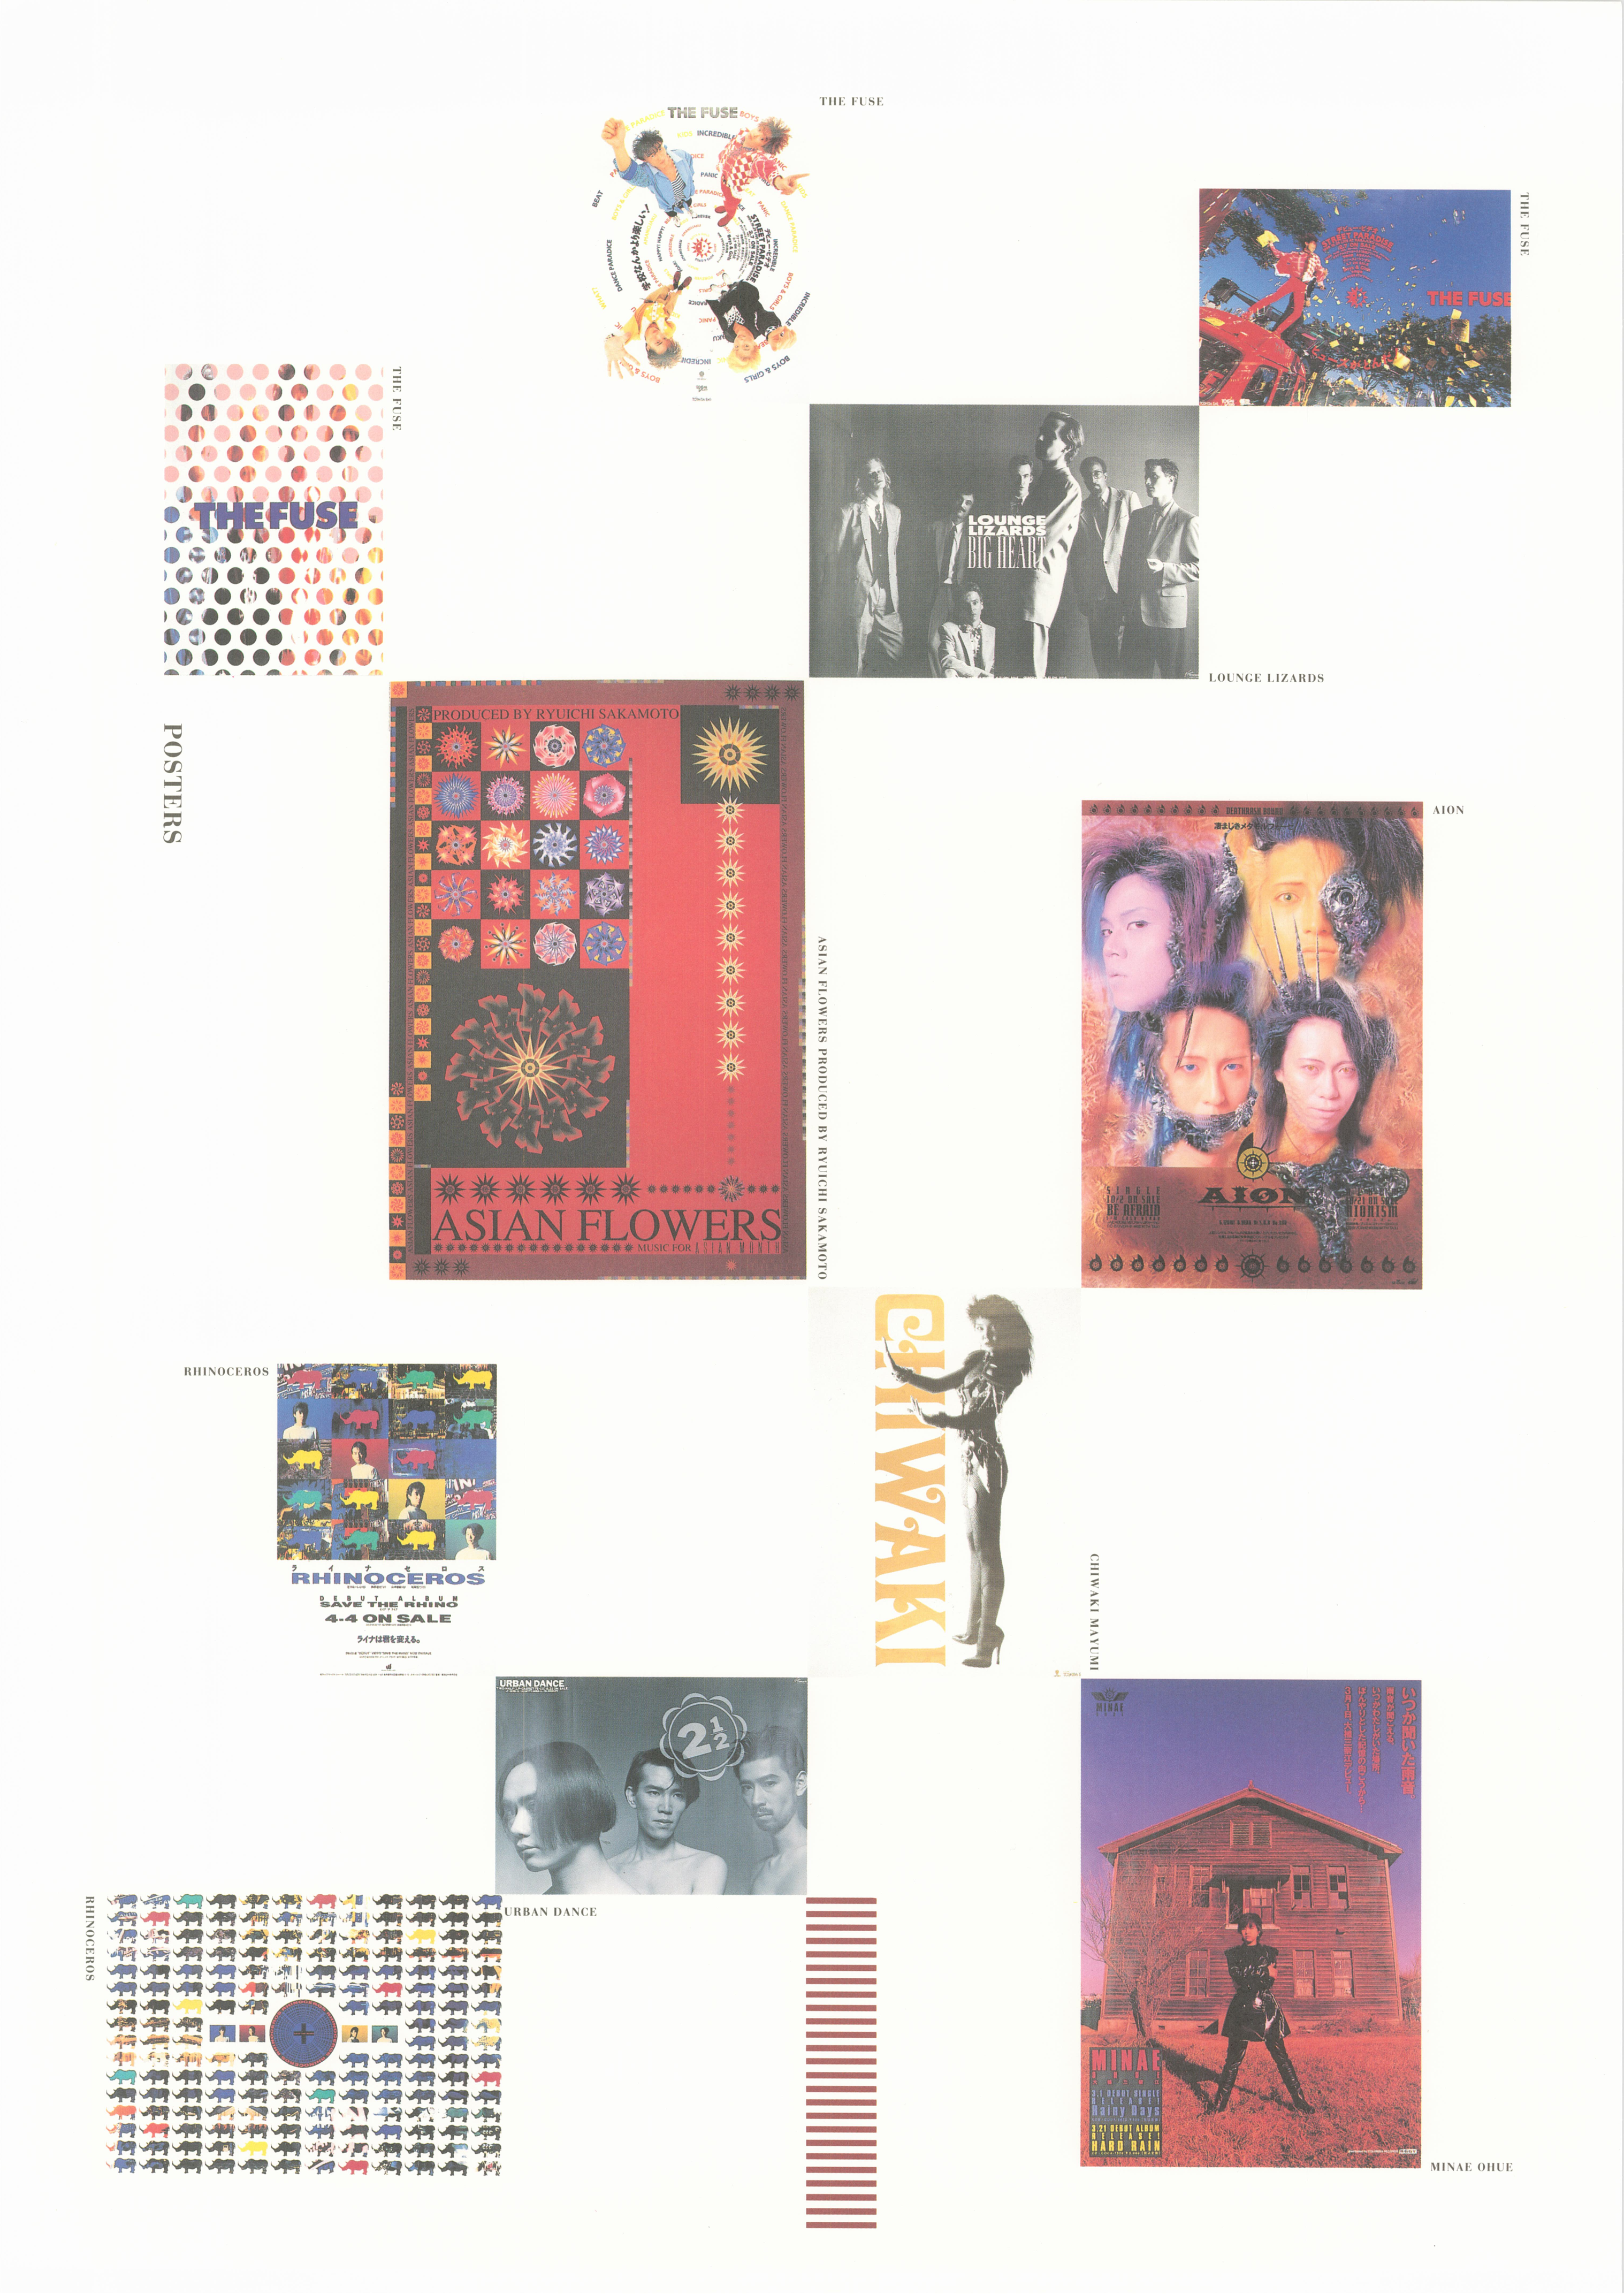 Osamu Sato Archive